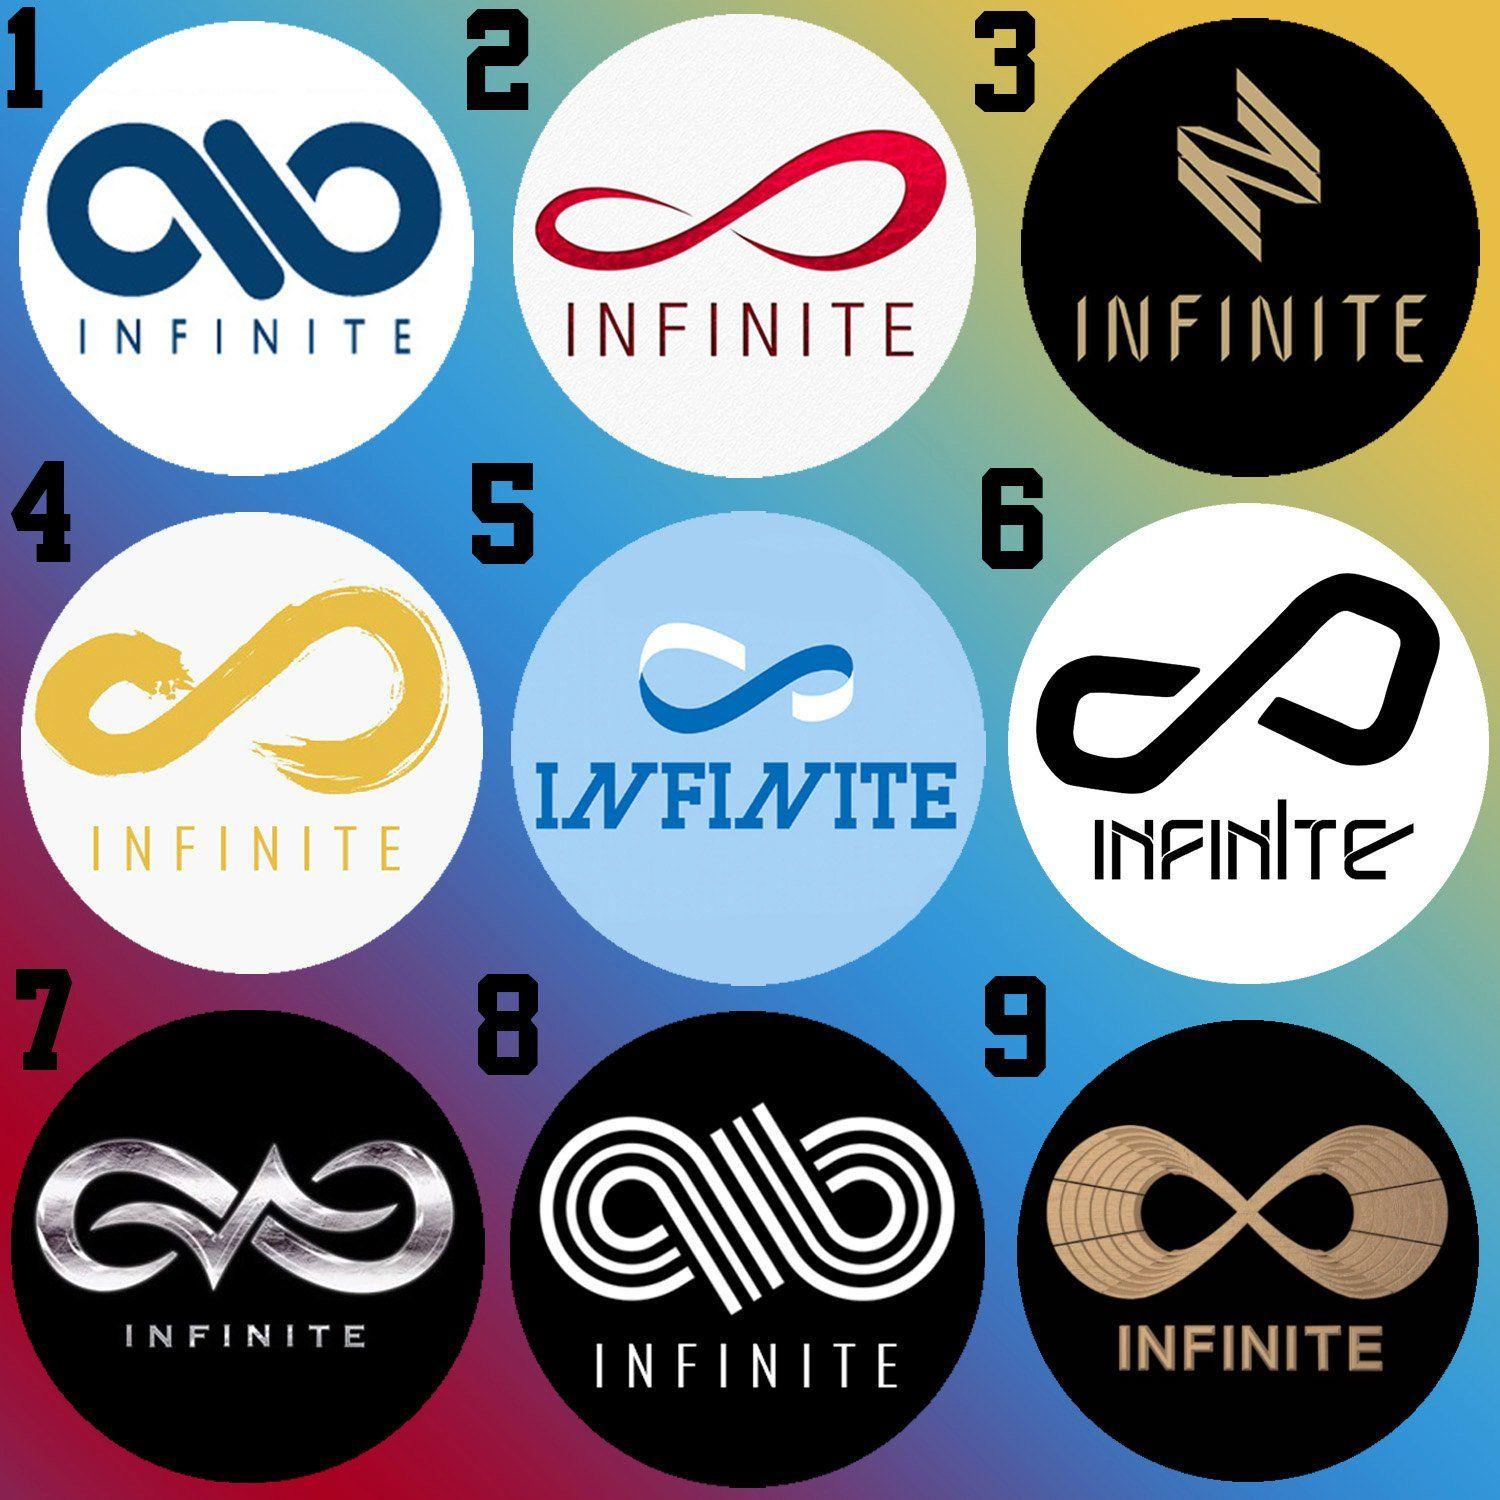 Infinite Kpop Logo - Unique logos of idol groups